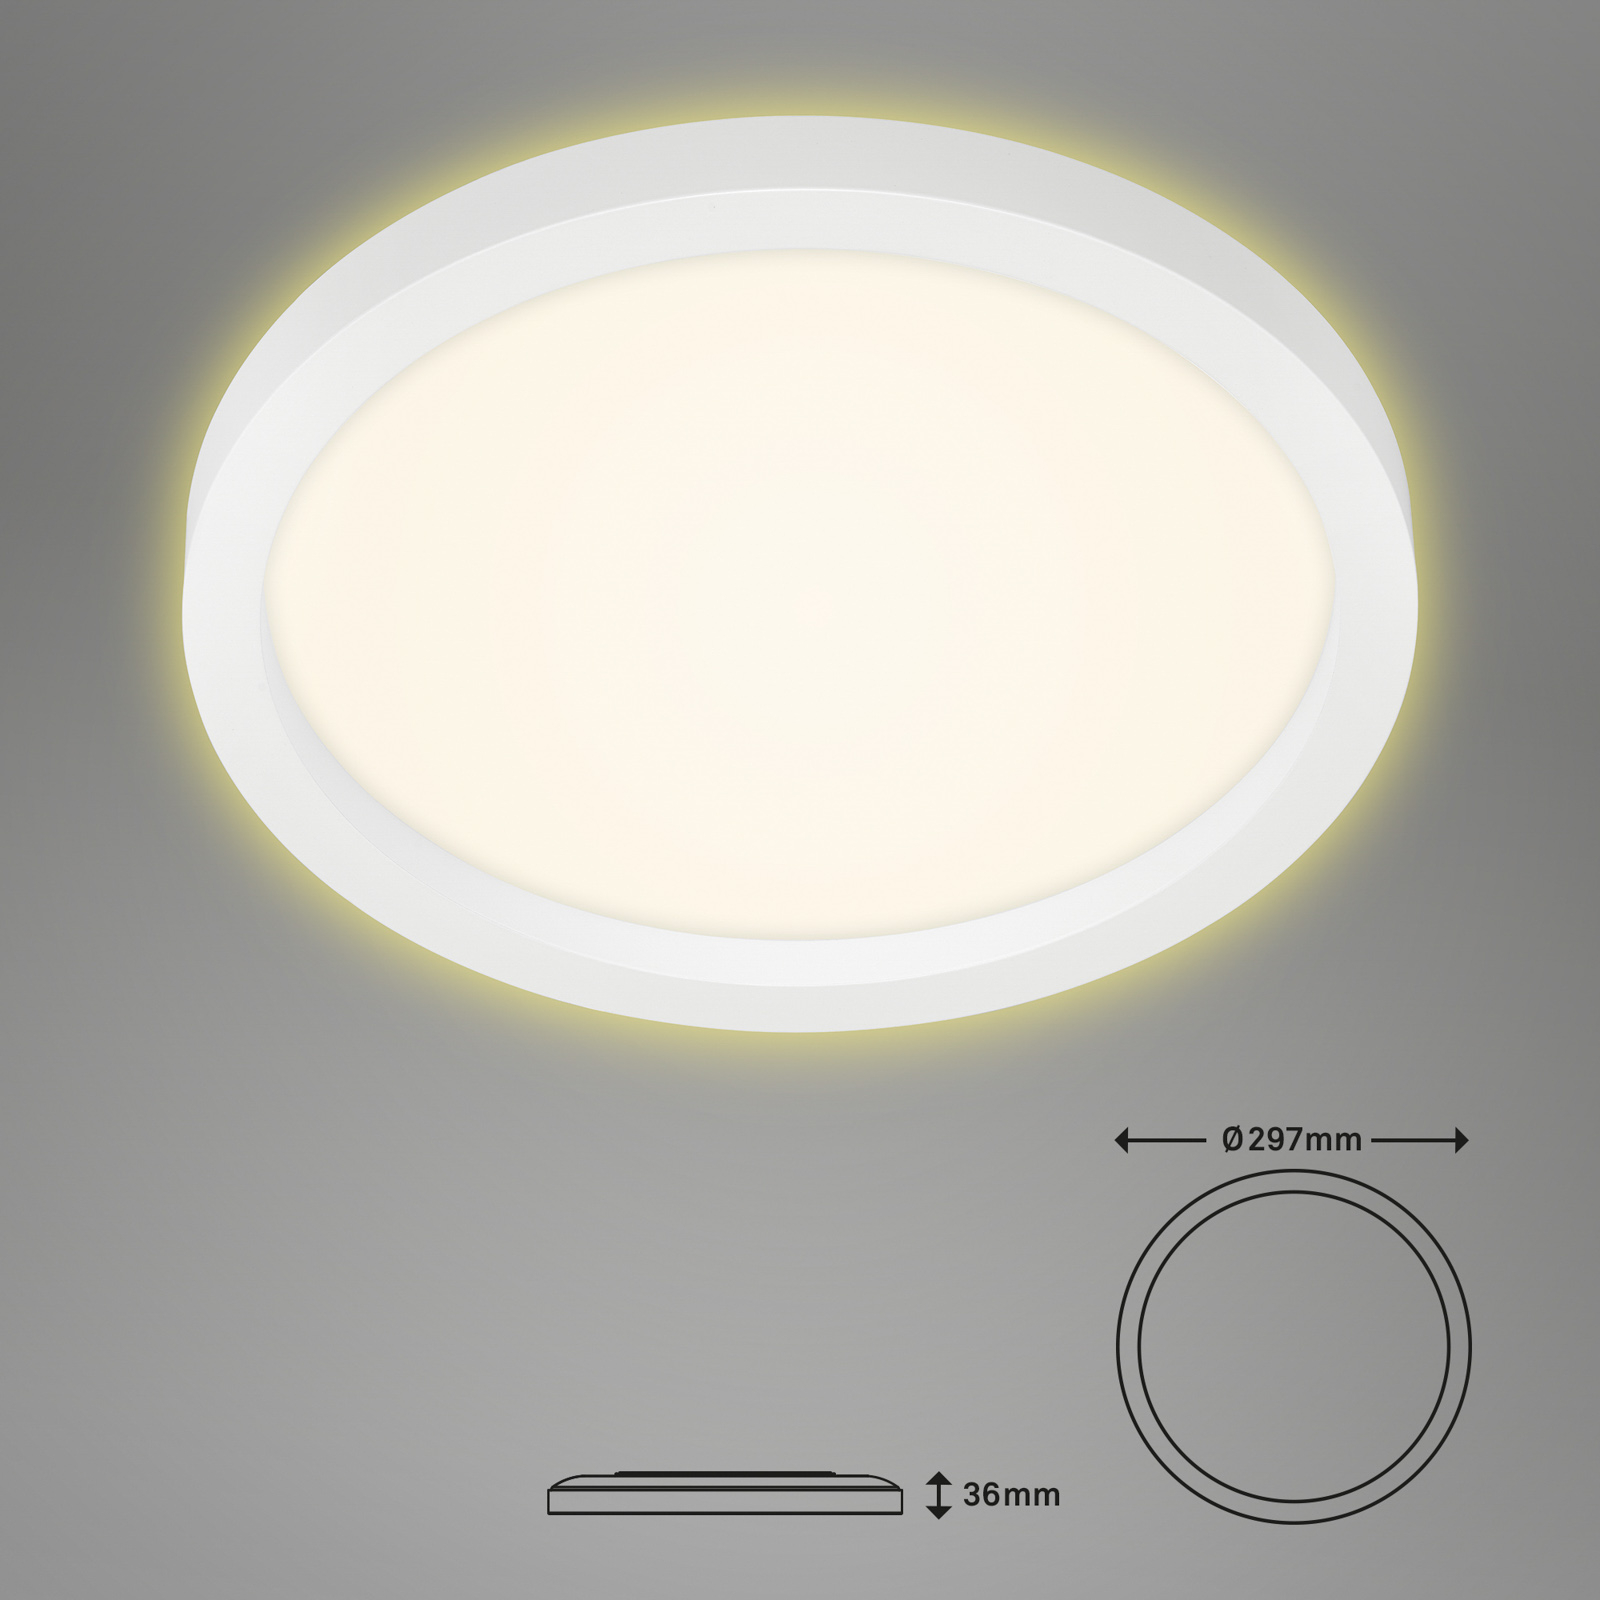 Lampa sufitowa LED 7361, Ø 29 cm, biała